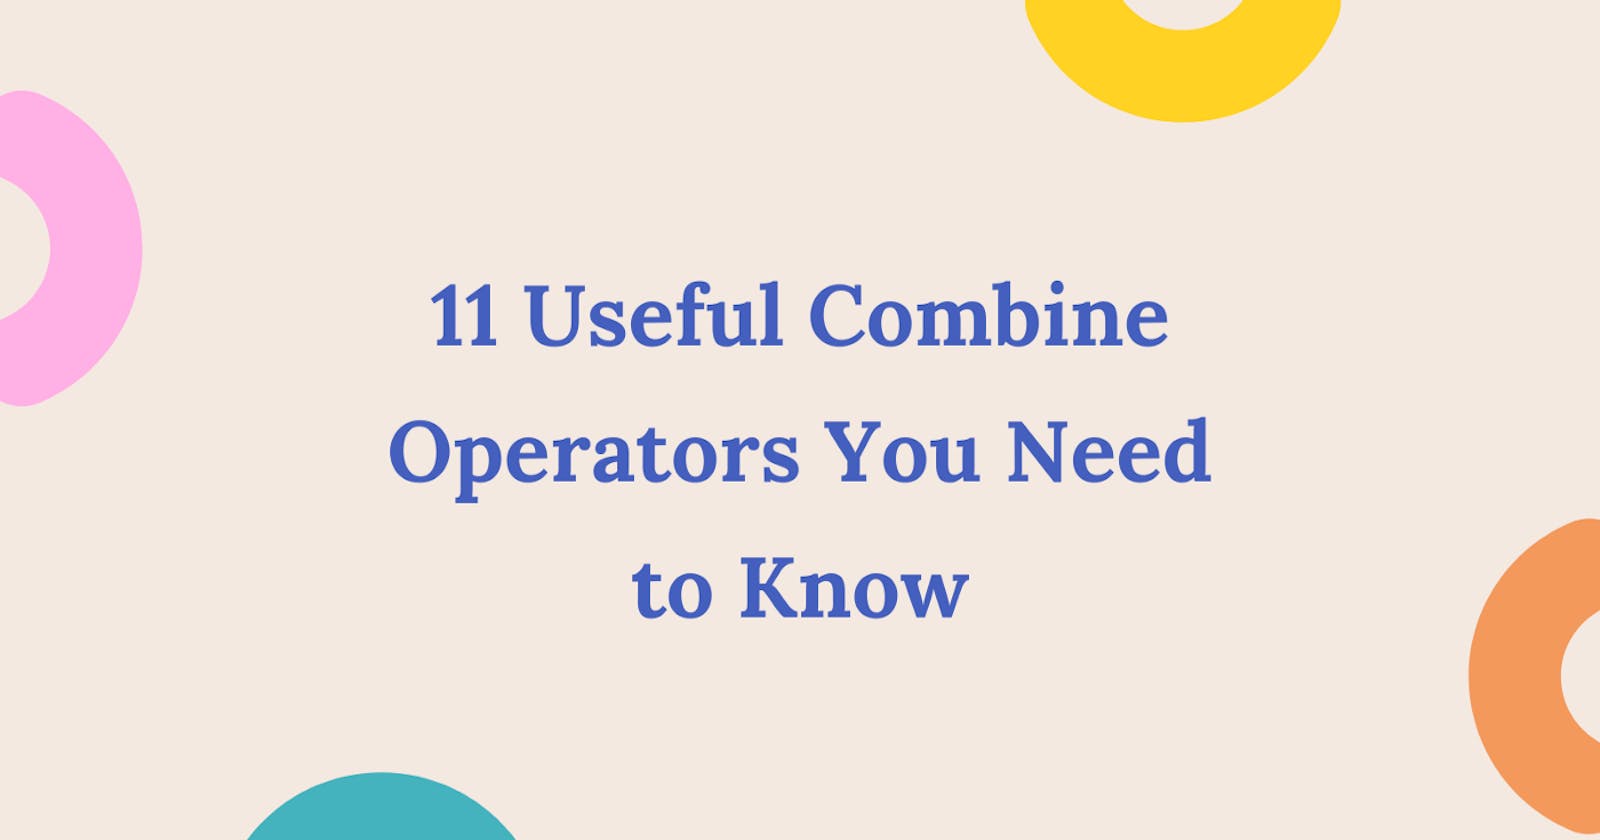 Swift — 11 Useful Combine Operators You Need to Know